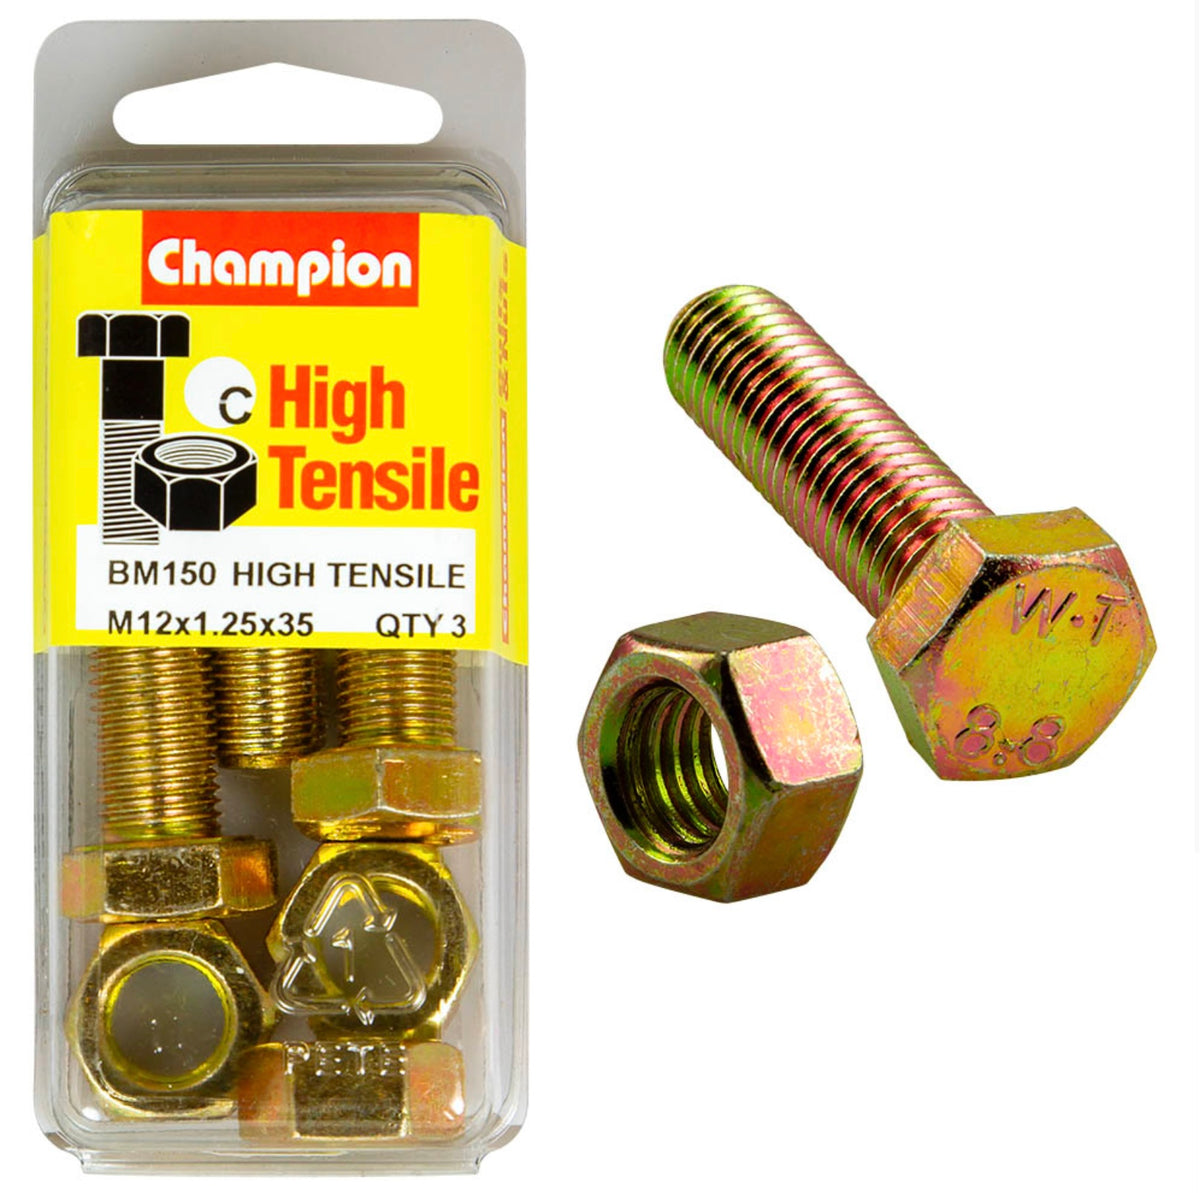 Champion High Tensile M12 x 1.25 x 35mm